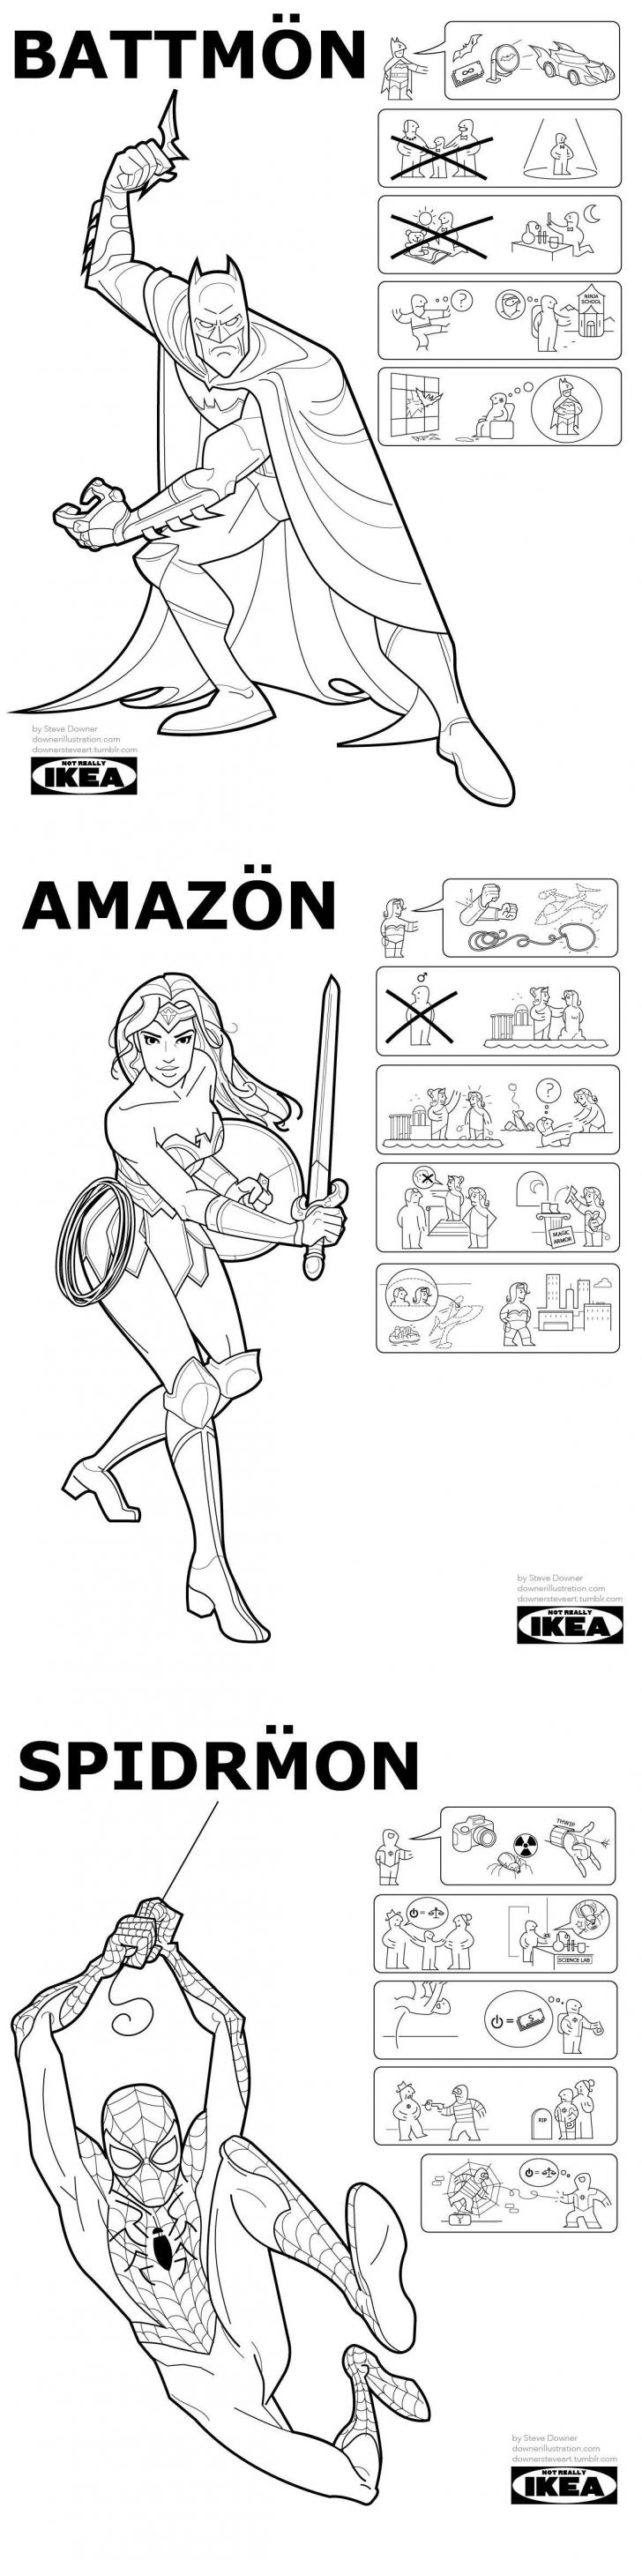 Superhero+Origins+as+IKEA+Manuals